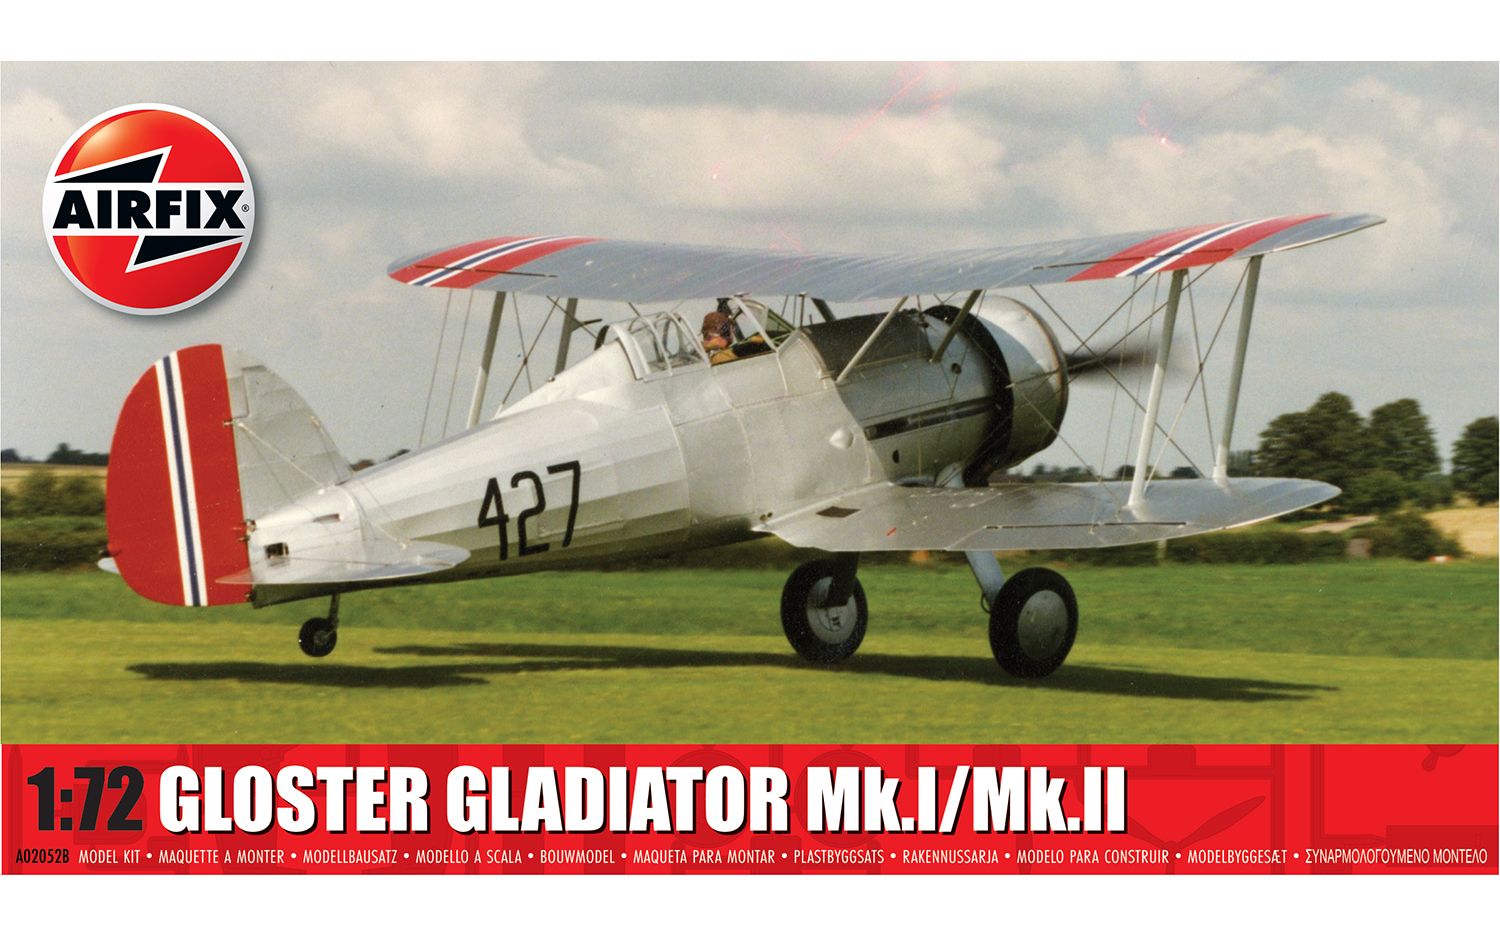 [PRE ORDER] Airfix Gloster Gladiator Mk.I/Mk.II 1:72 - Release Date August 2024 - Loaded Dice